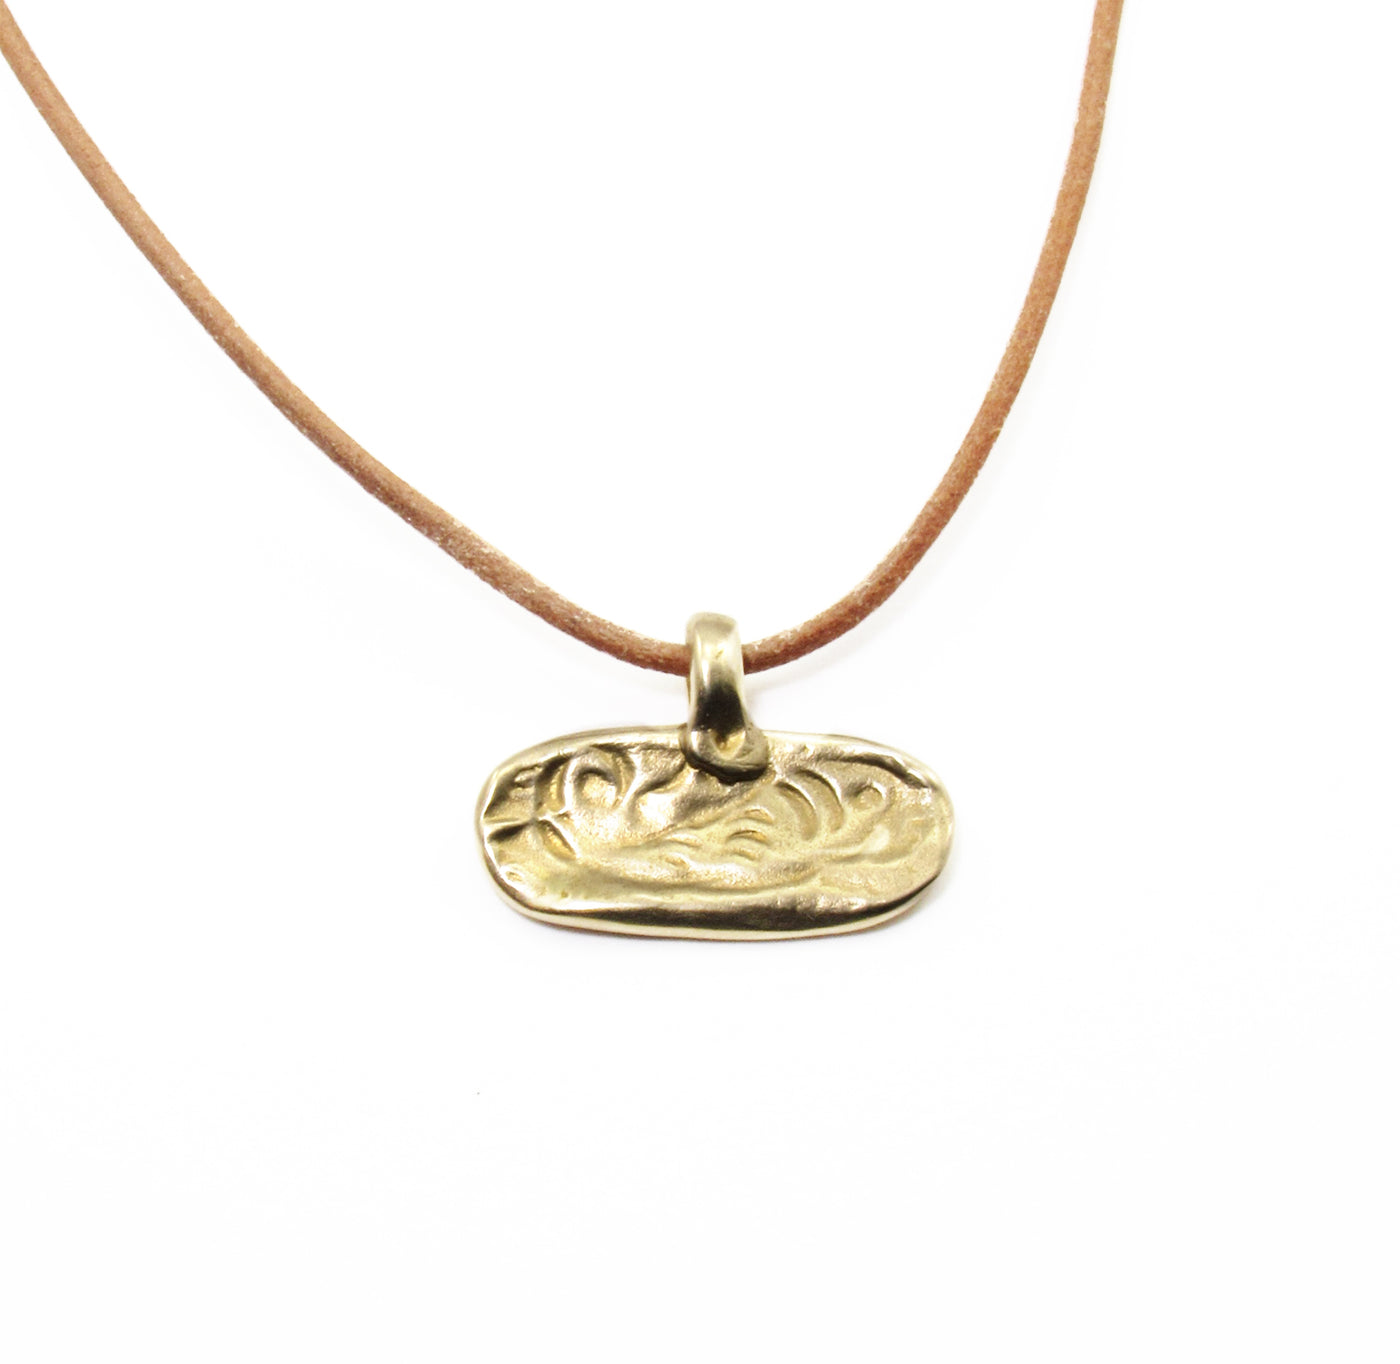 Fish impression bronze pendant leather necklace or wrap bracelet inspirational quote card